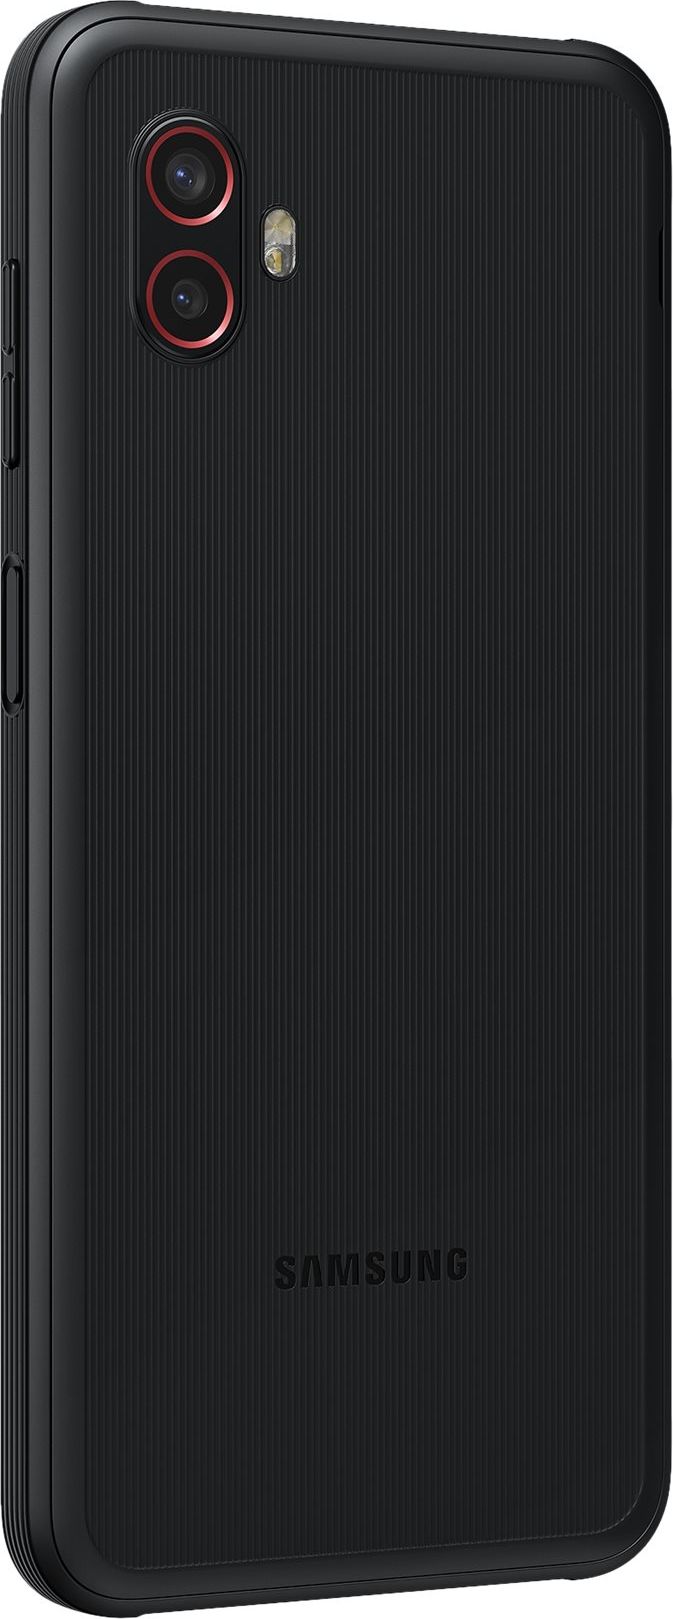 Samsung Xcover 6 Pro BLK Telenor B2C